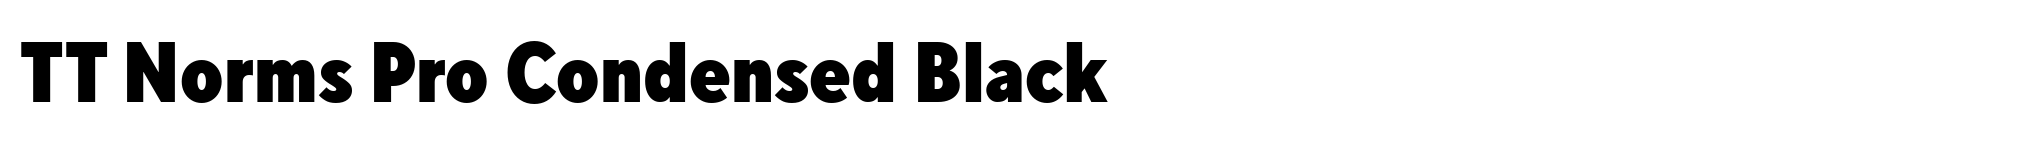 TT Norms Pro Condensed Black image